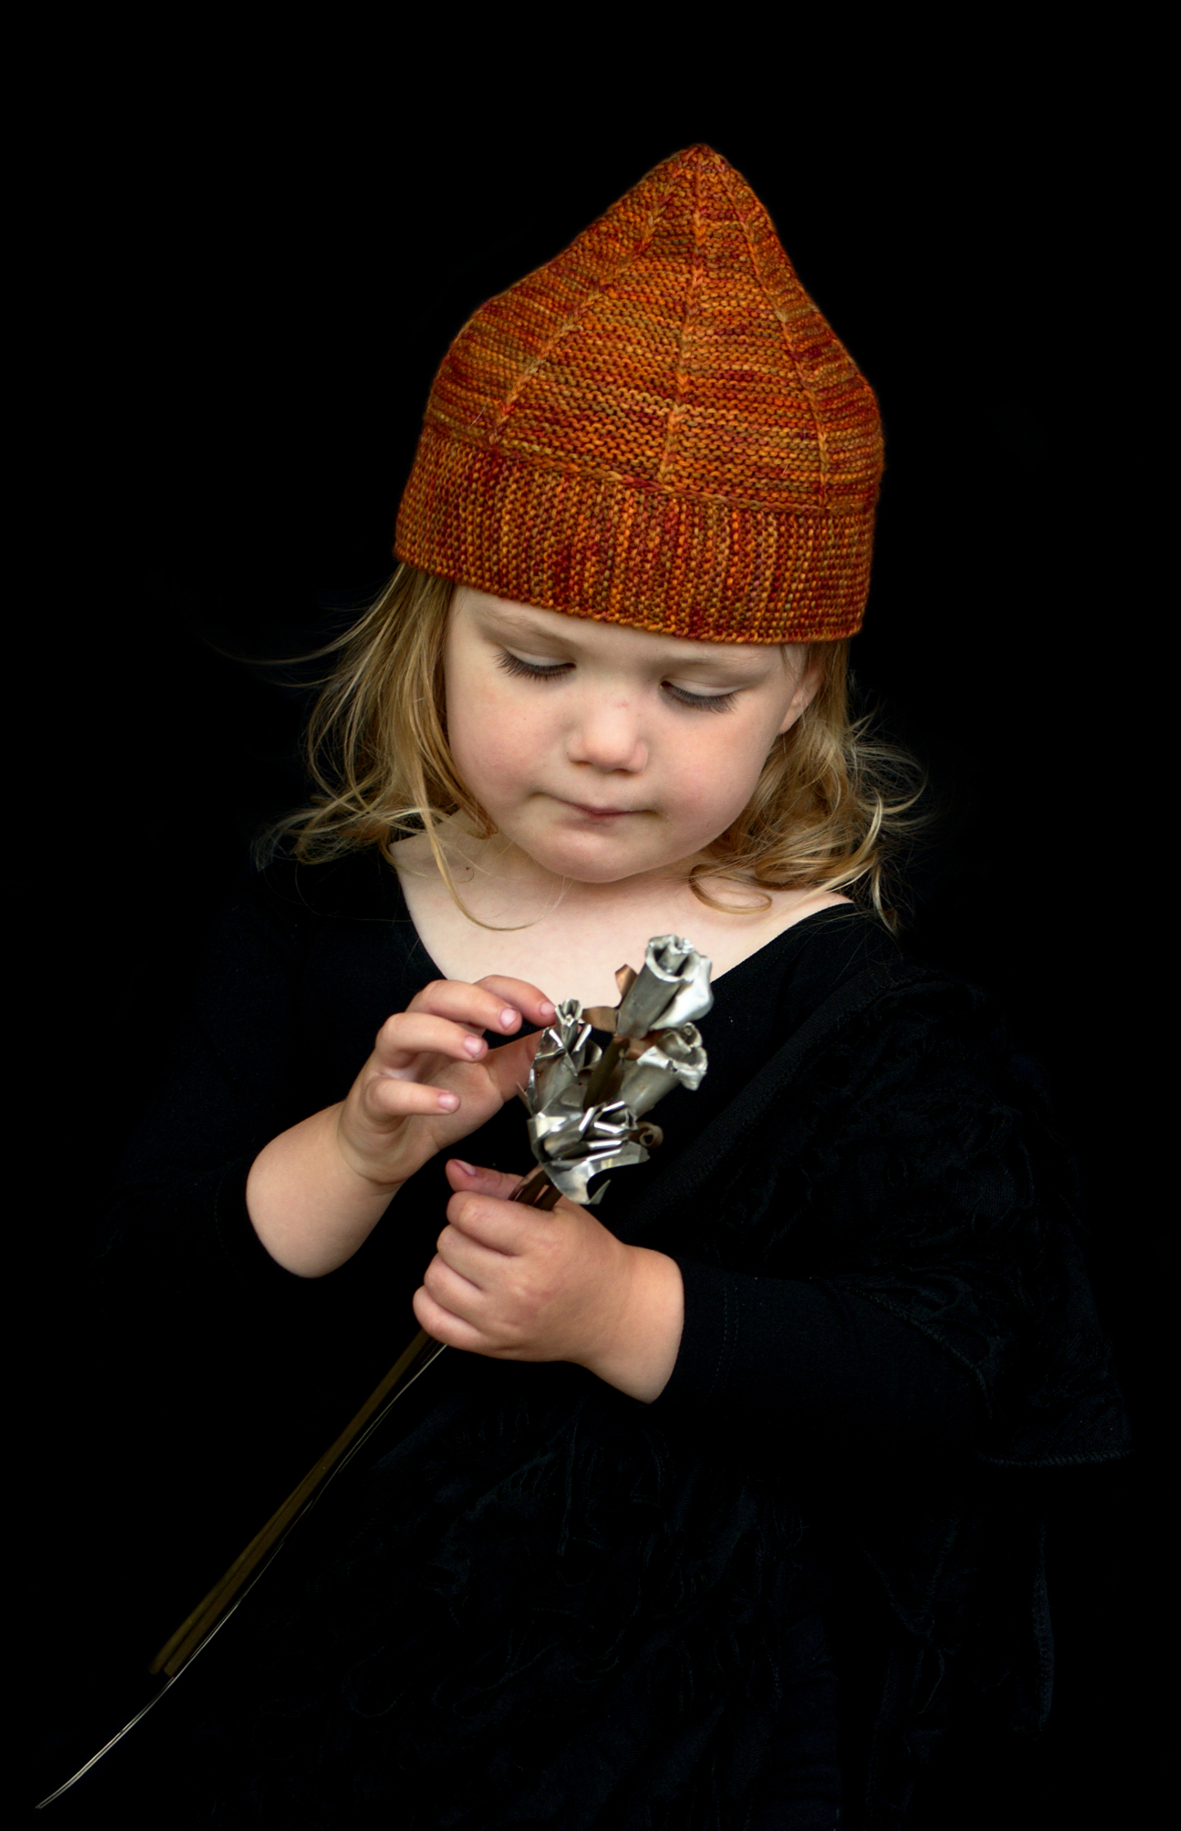 Hadleigh pixie Hat knitting pattern